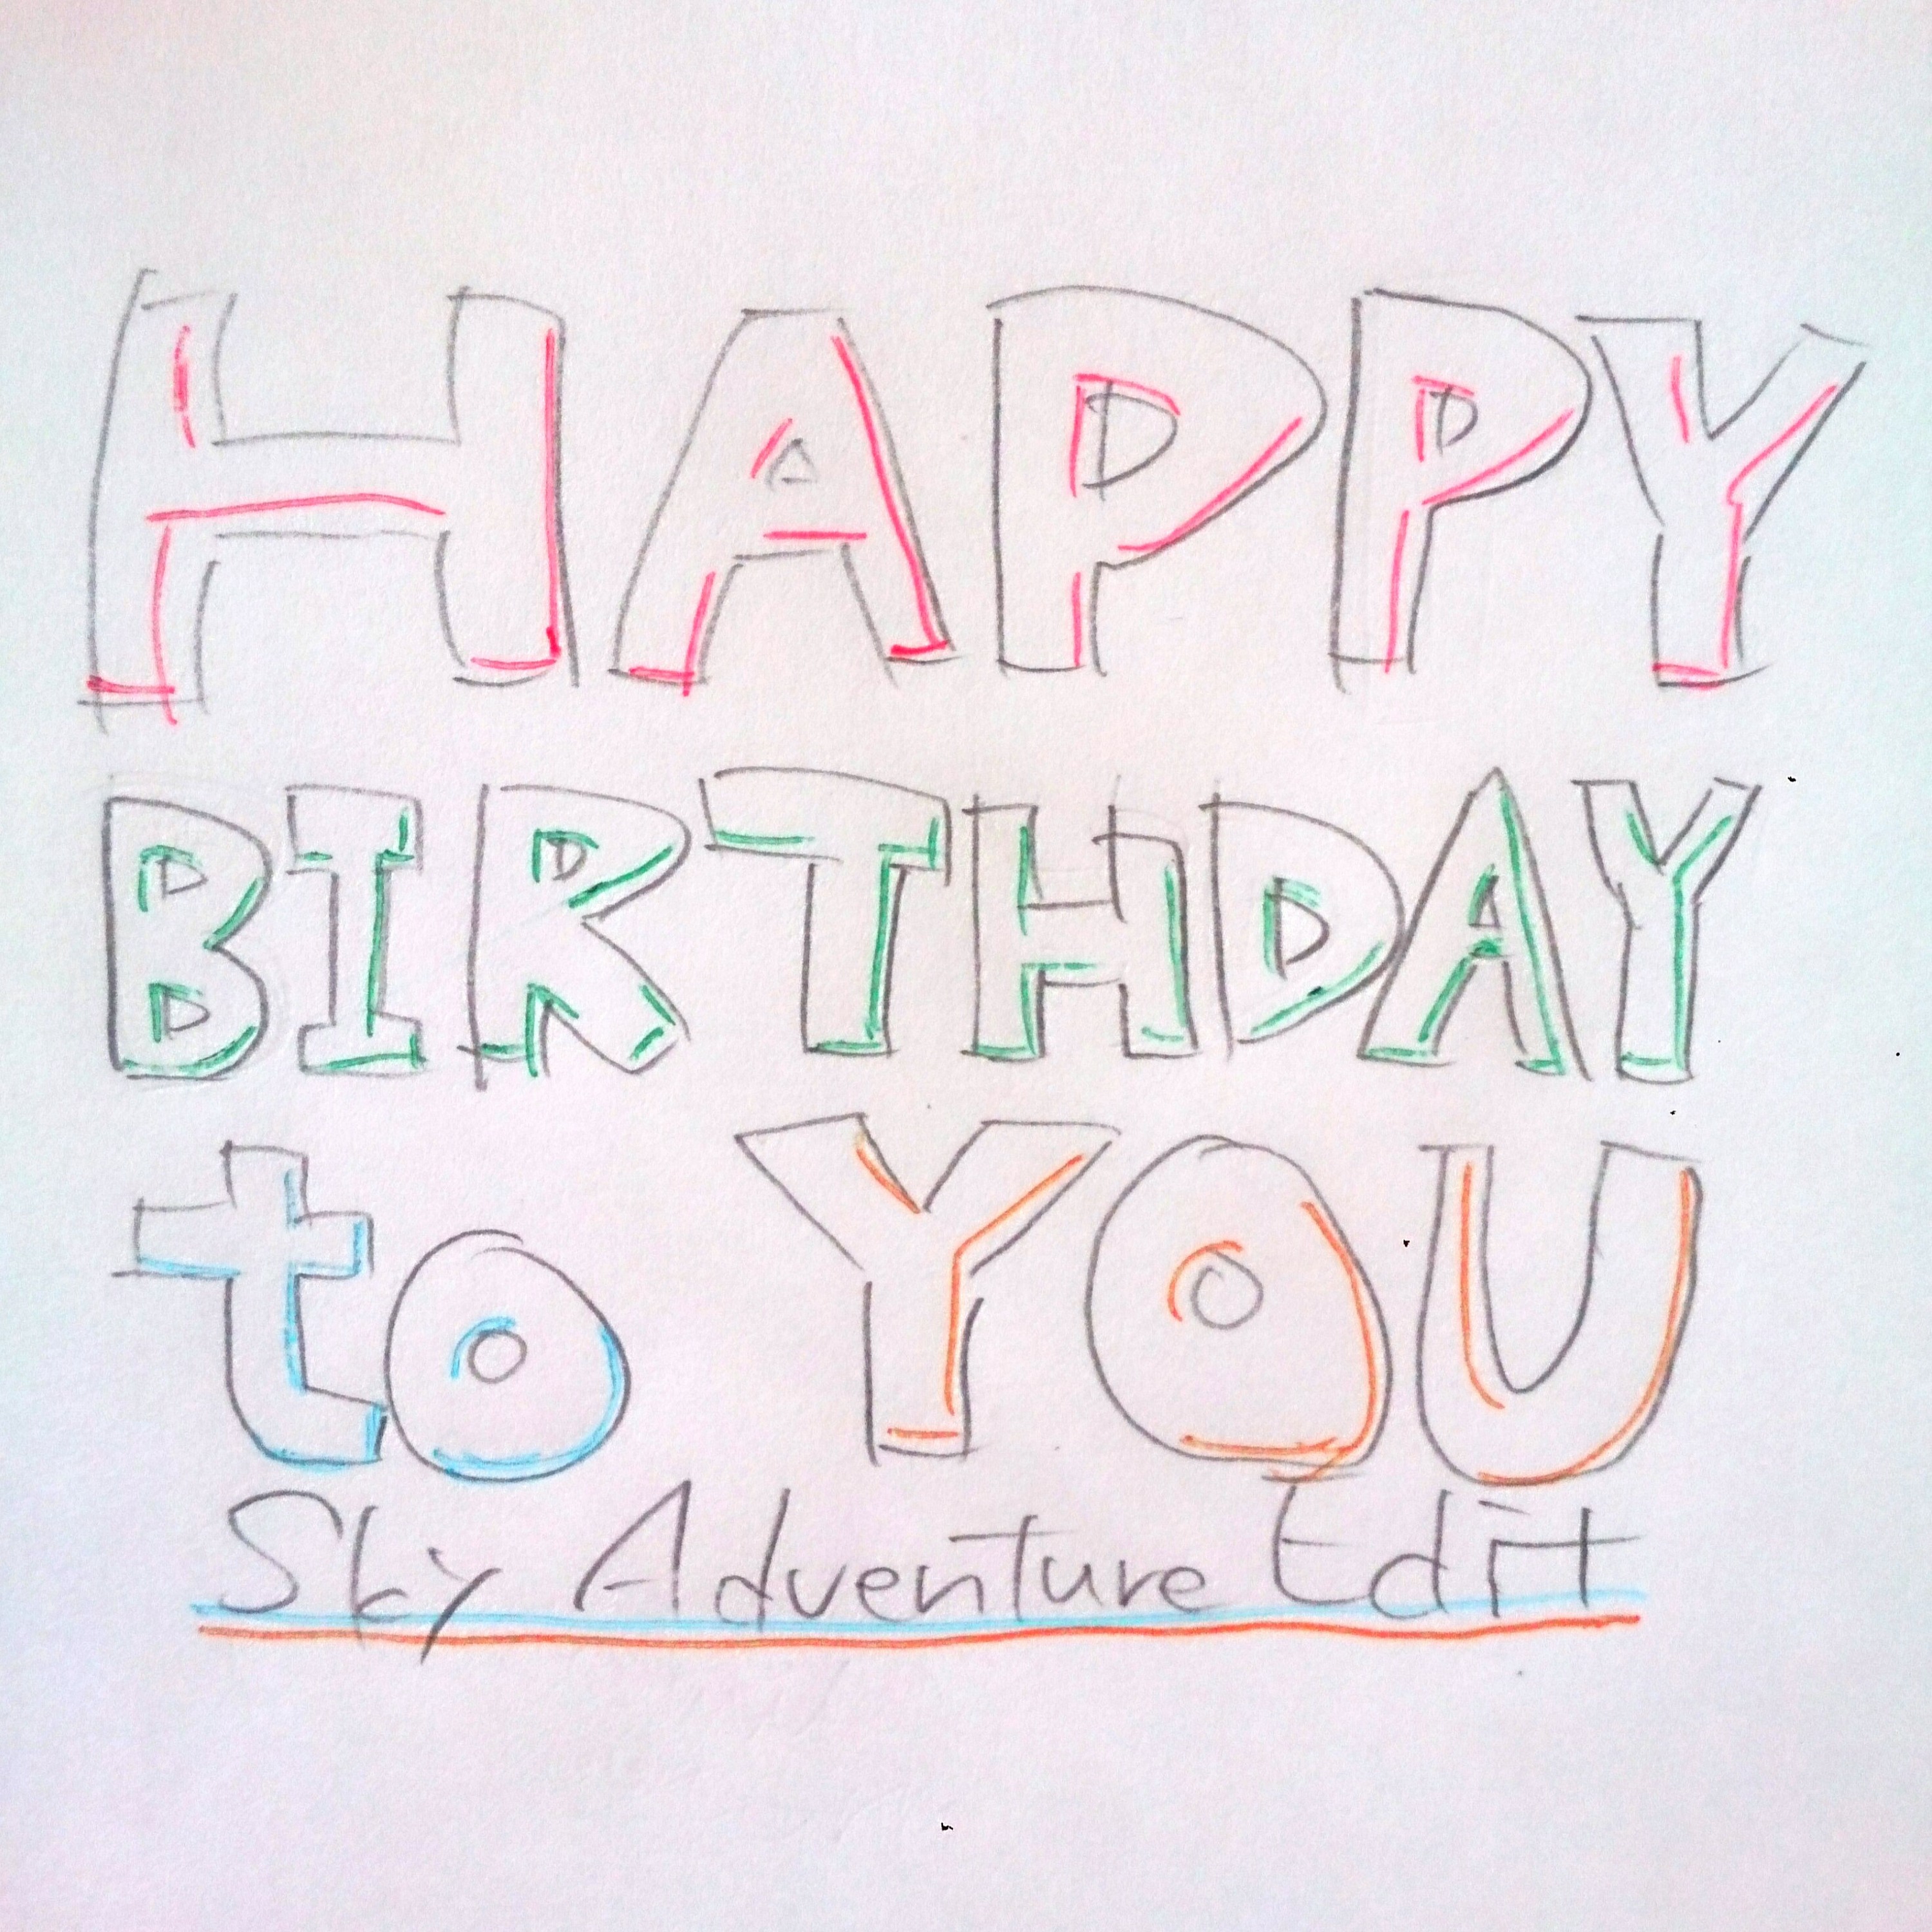 Happy Birthday to You (Sky Adventure Edit)